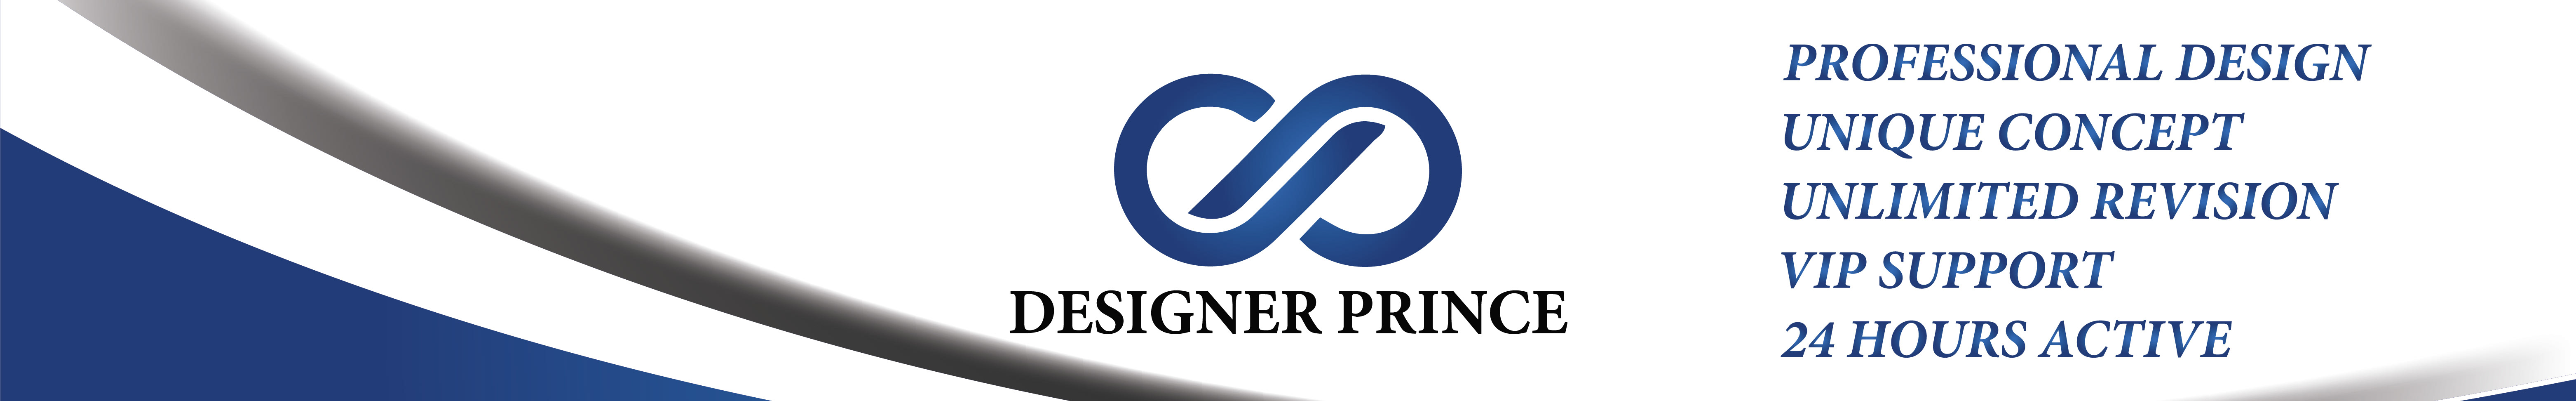 Designer Prince's profile banner